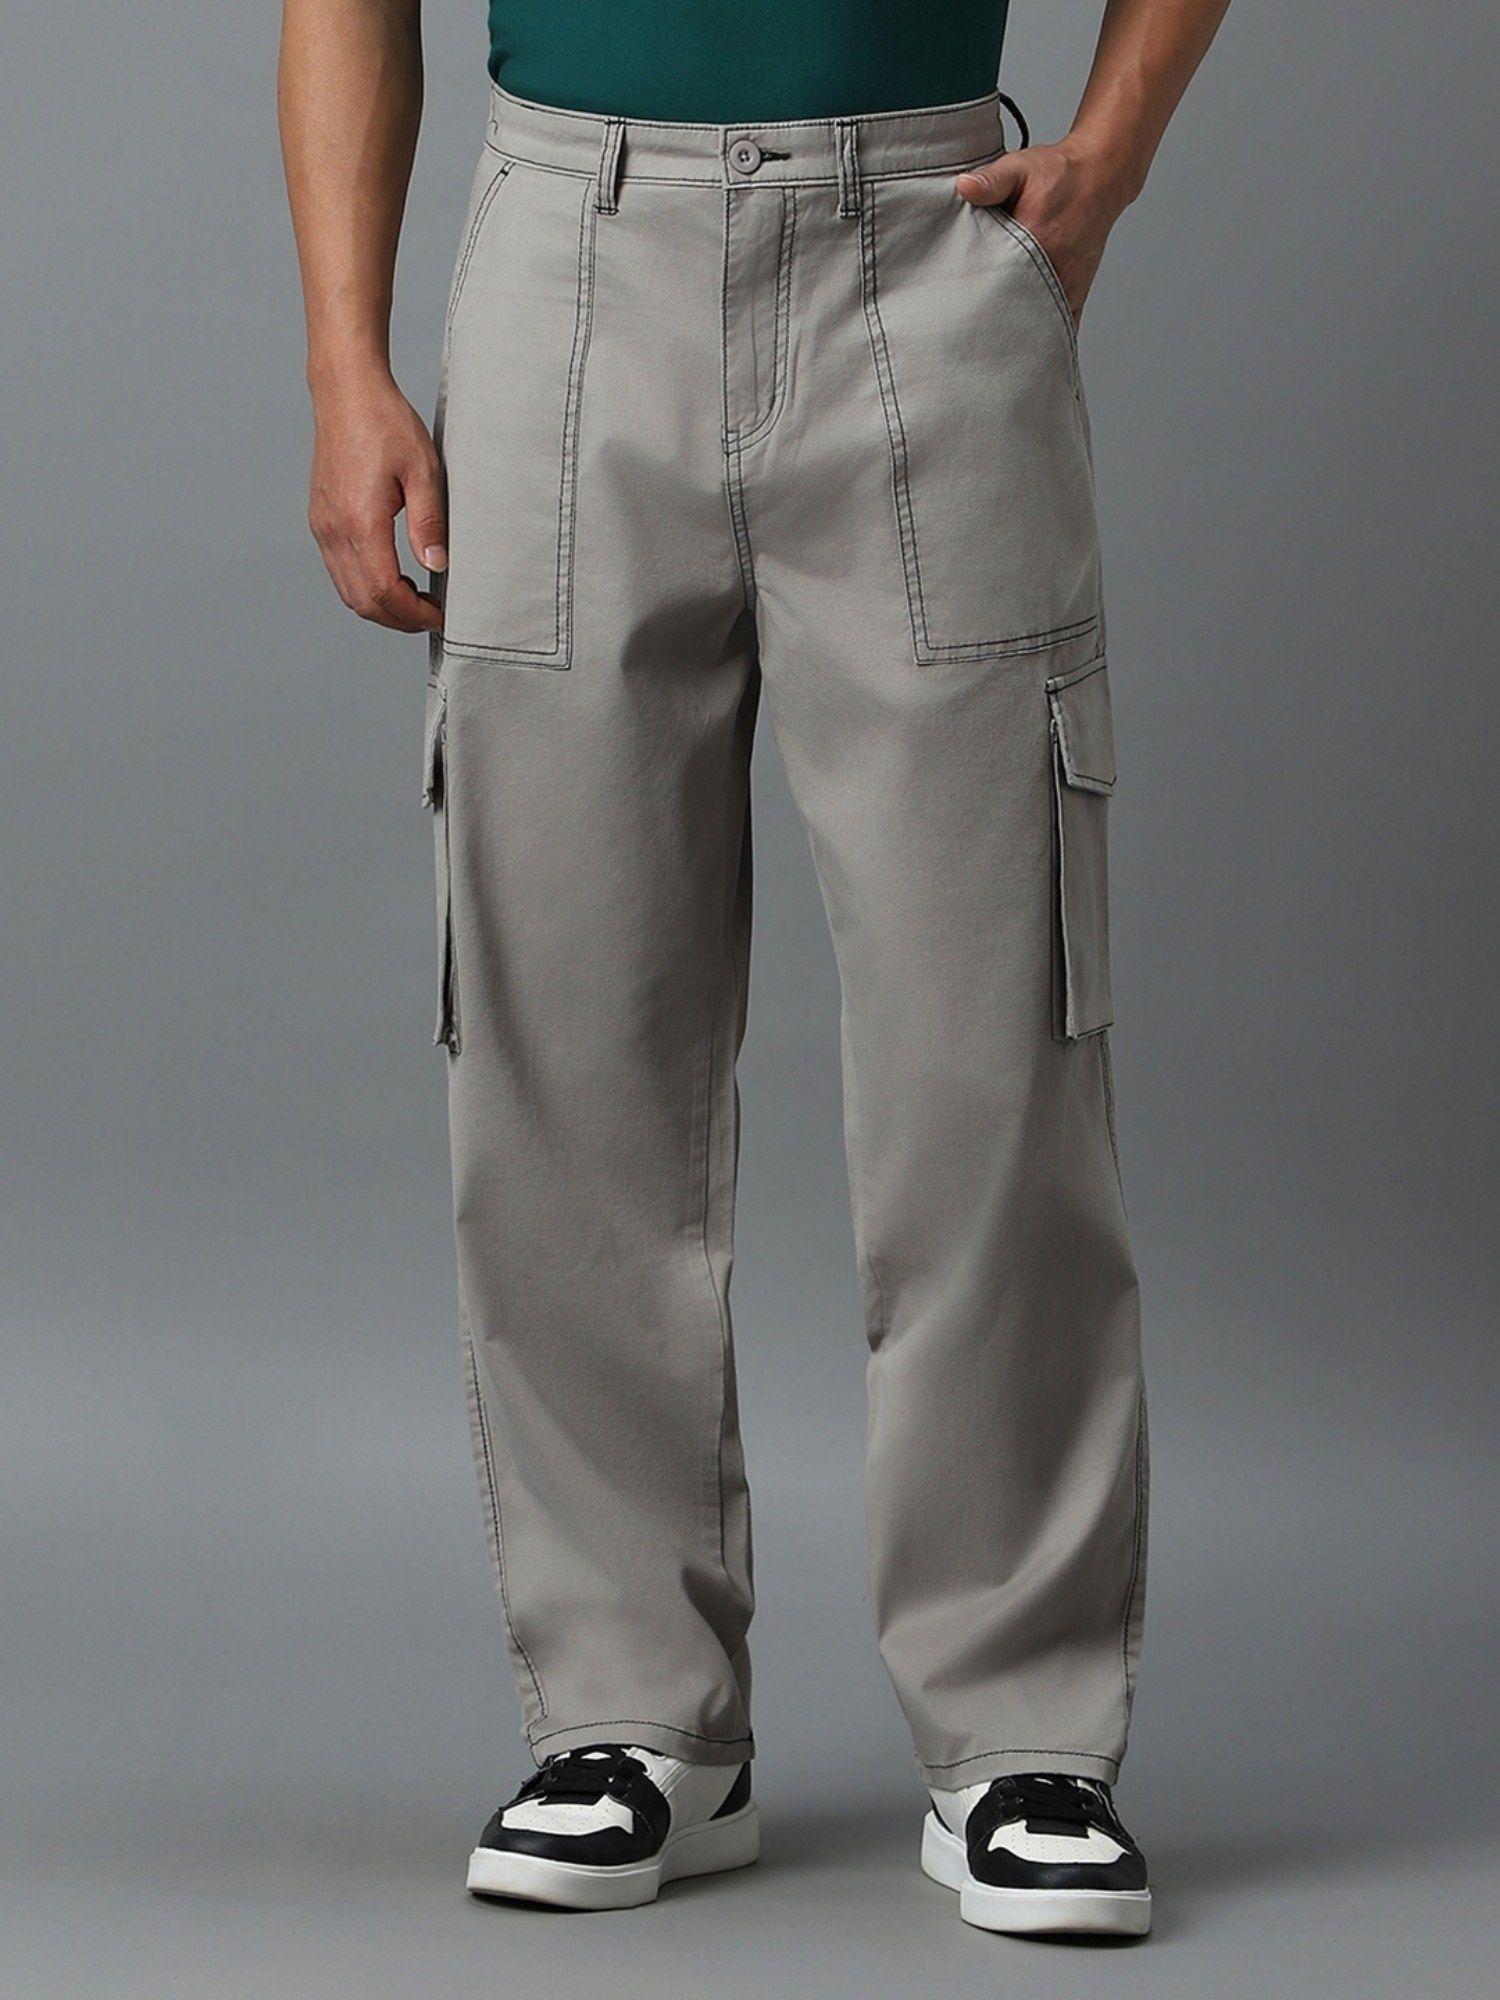 mens grey oversized cargo pants